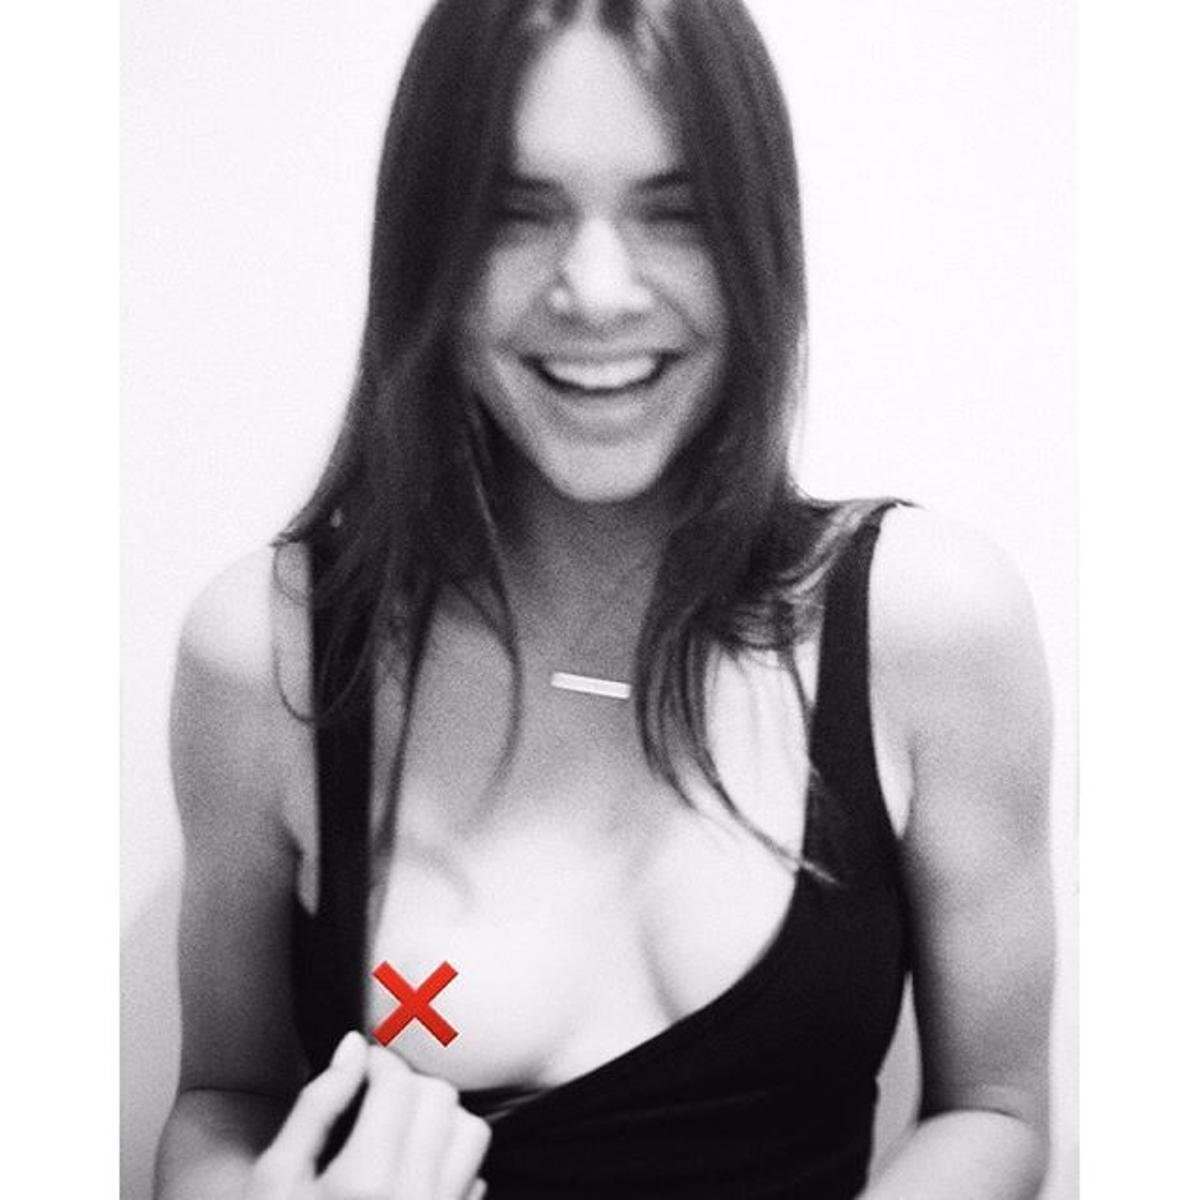 Las fotos más polémicas de Kendall Jenner